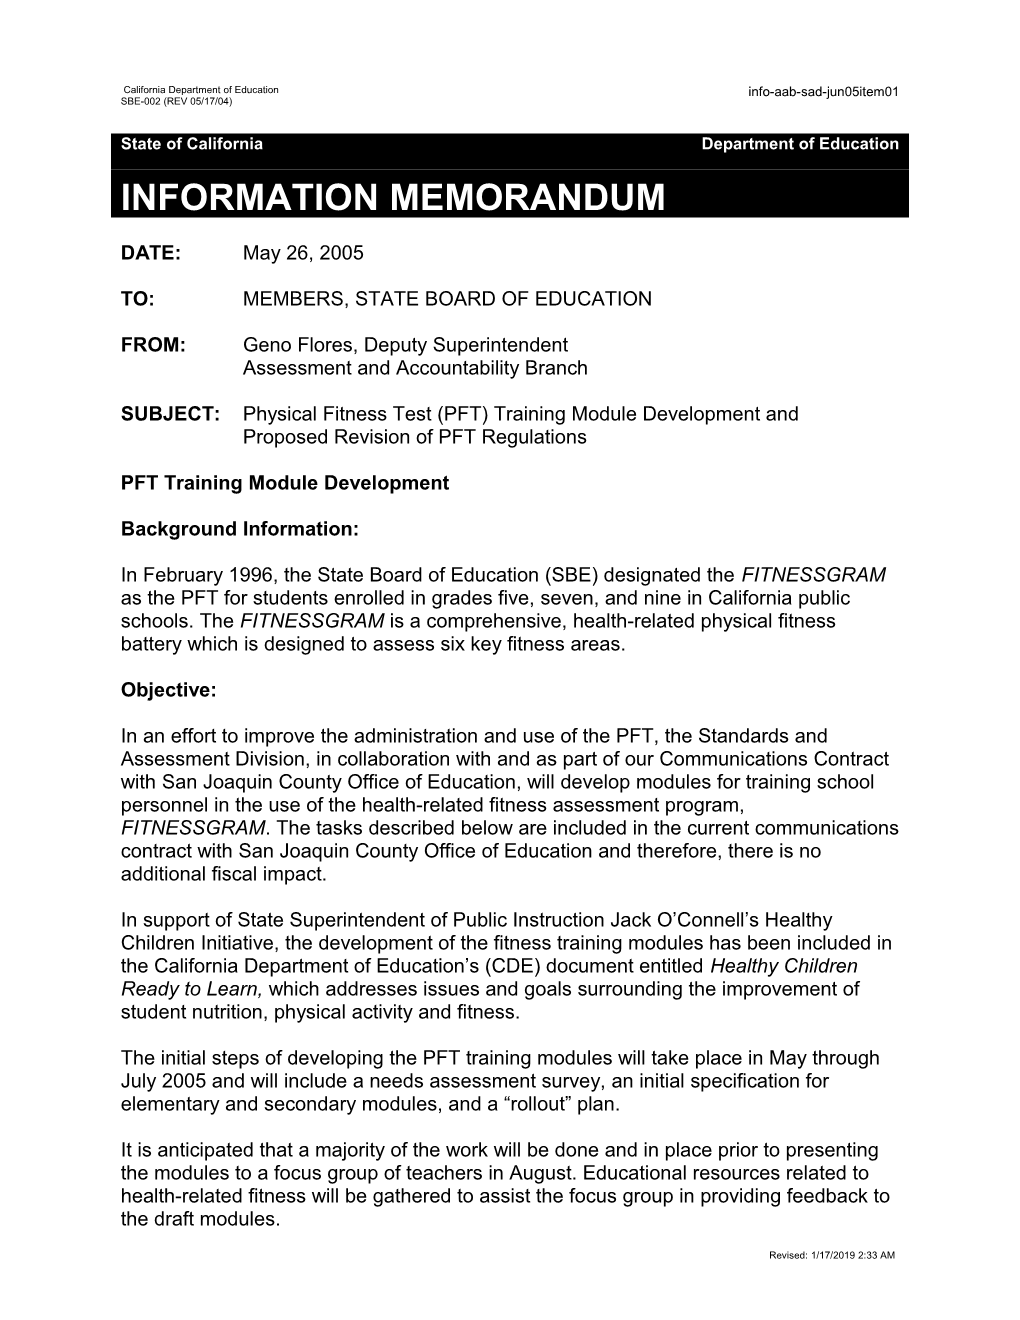 June 2005 AAB-SAD Item 01 - Information Memorandum (CA State Board of Education)